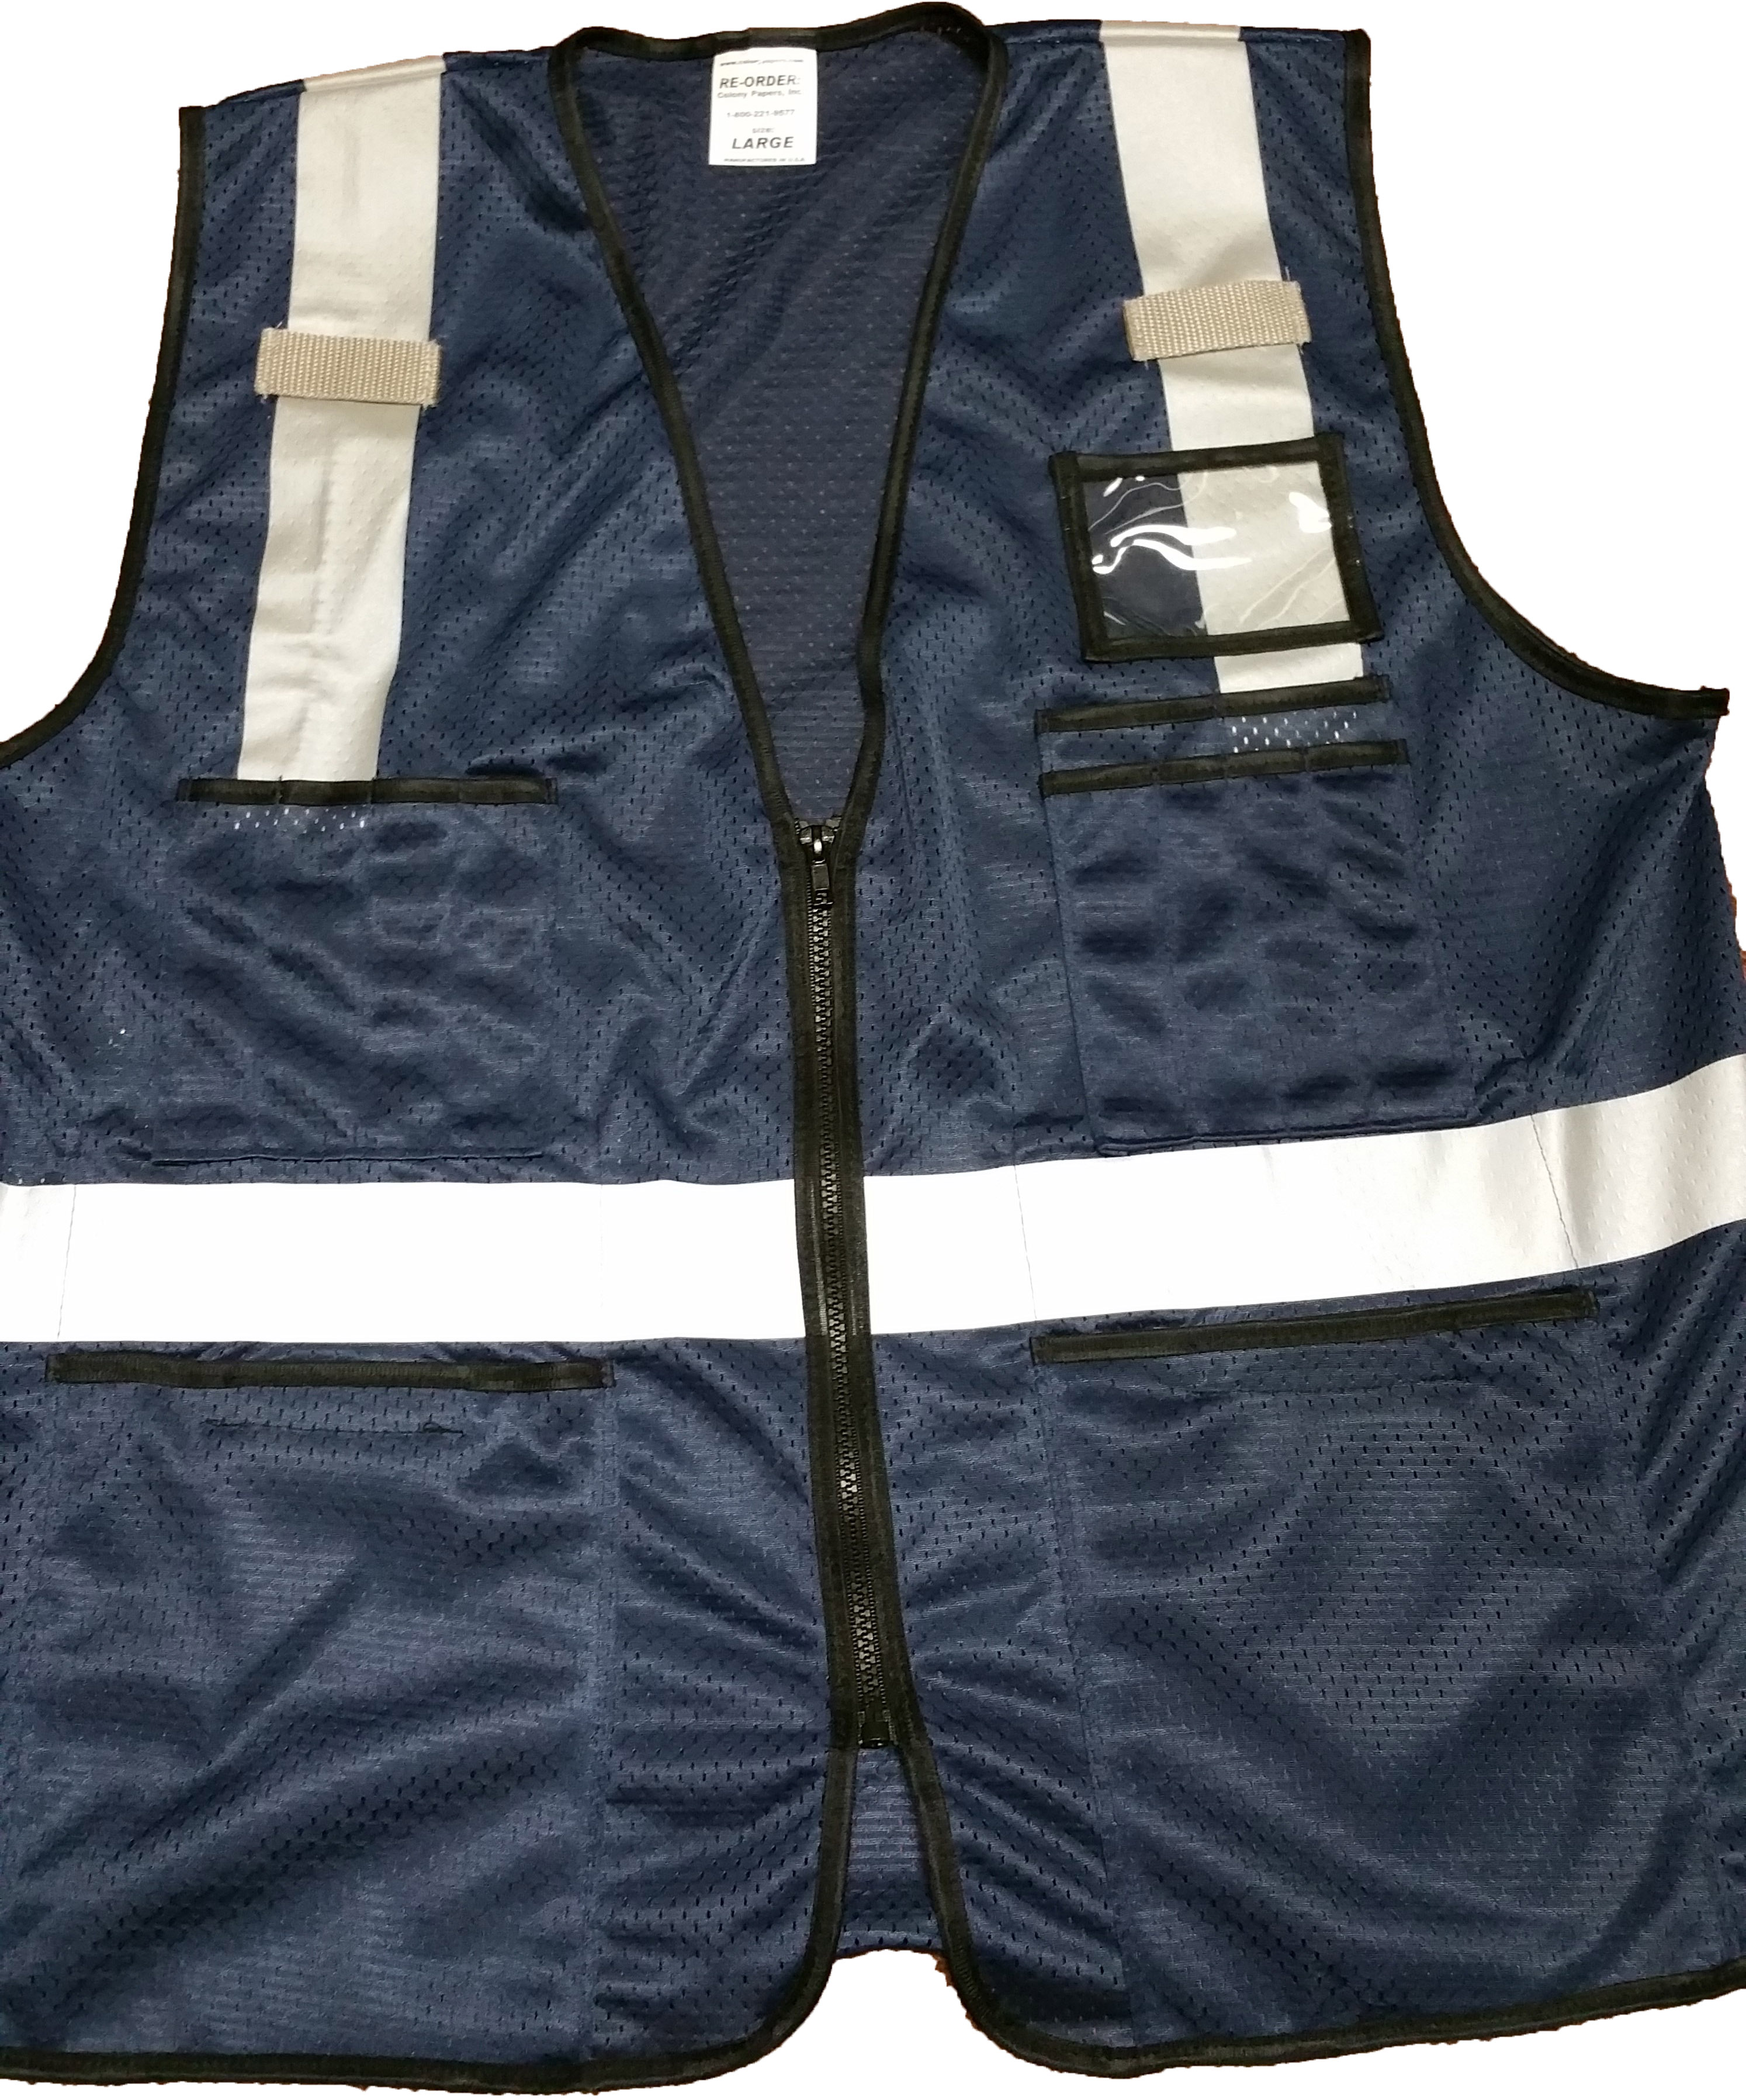 Safety Vests - 350-0117739 - Navy Blue Mesh Safety Vest with Silver Hi-Gloss St